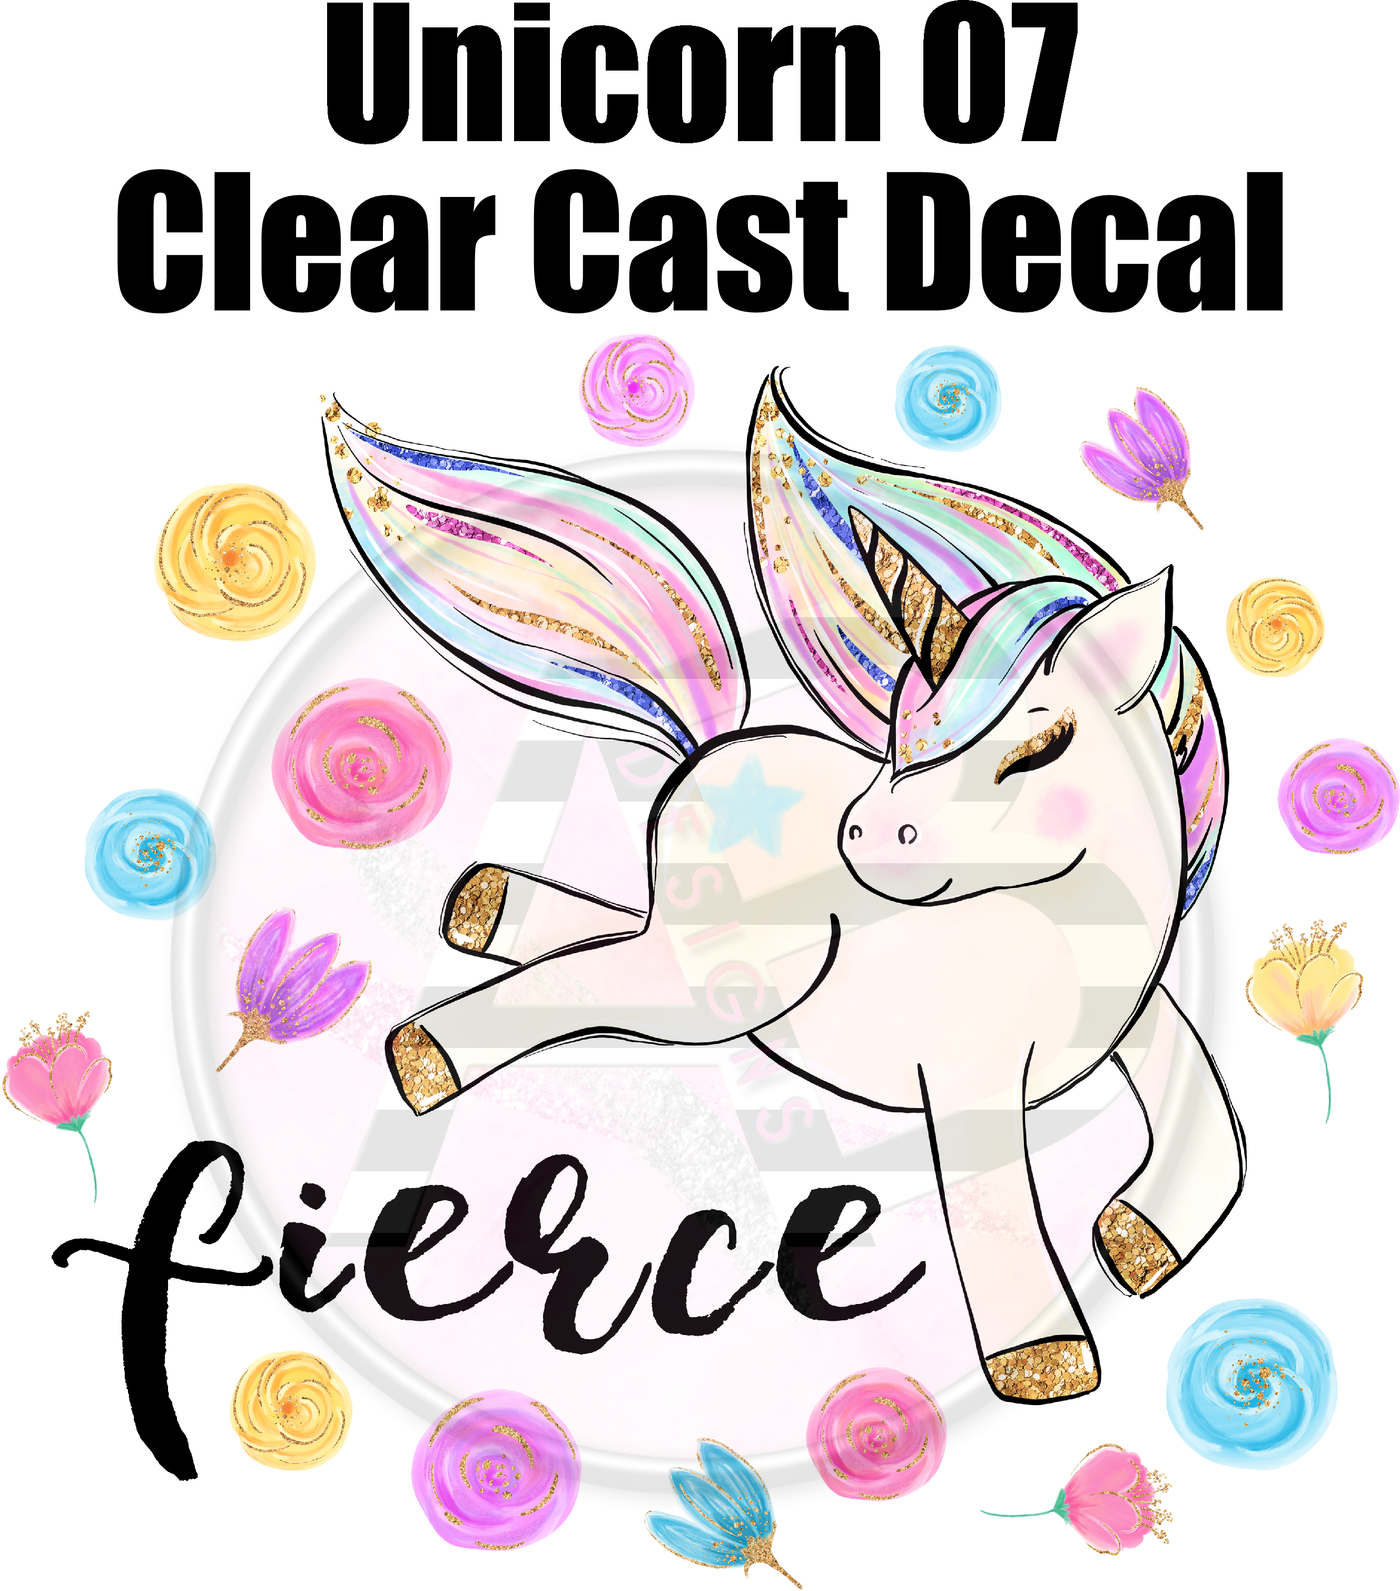 Unicorn 07 - Clear Cast Decal